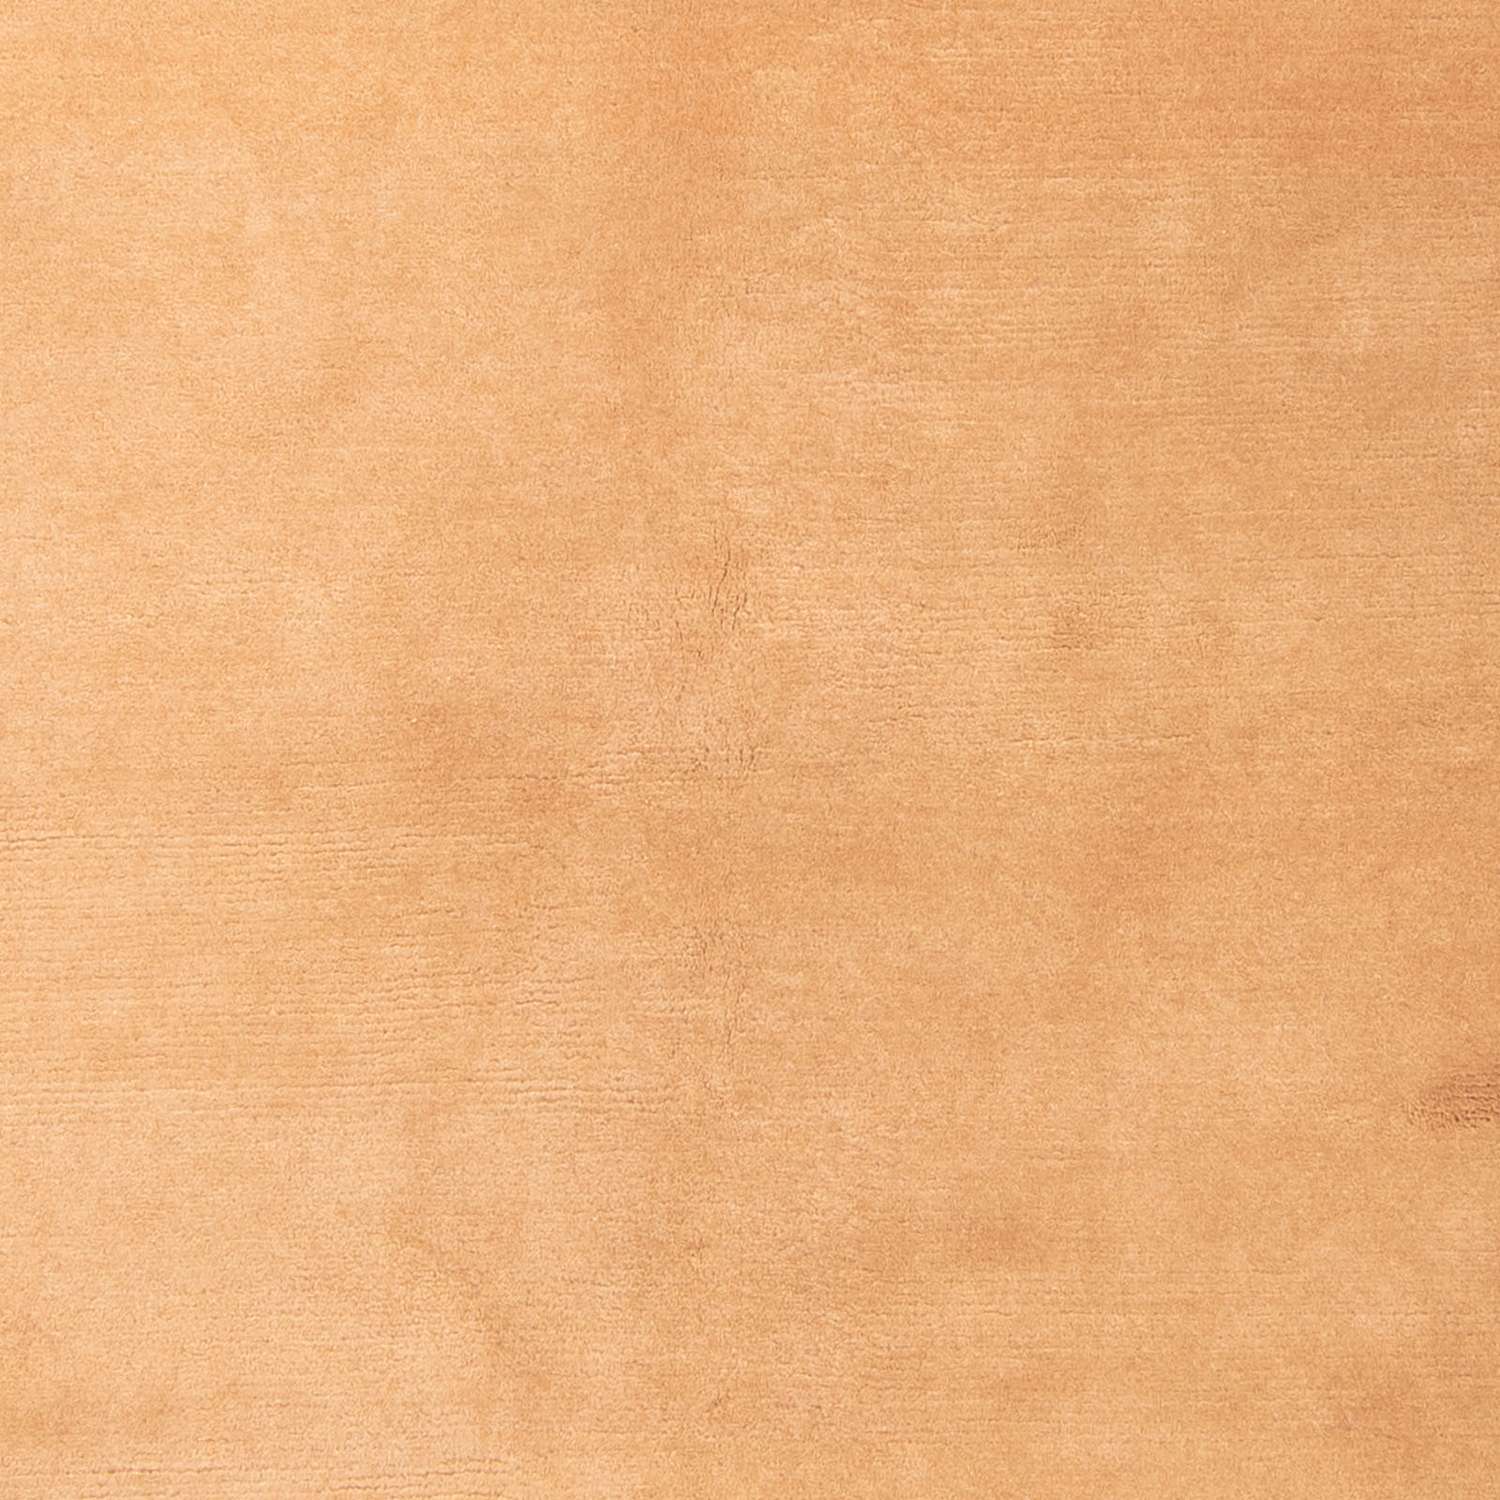 Nepal Rug - 196 x 147 cm - light brown